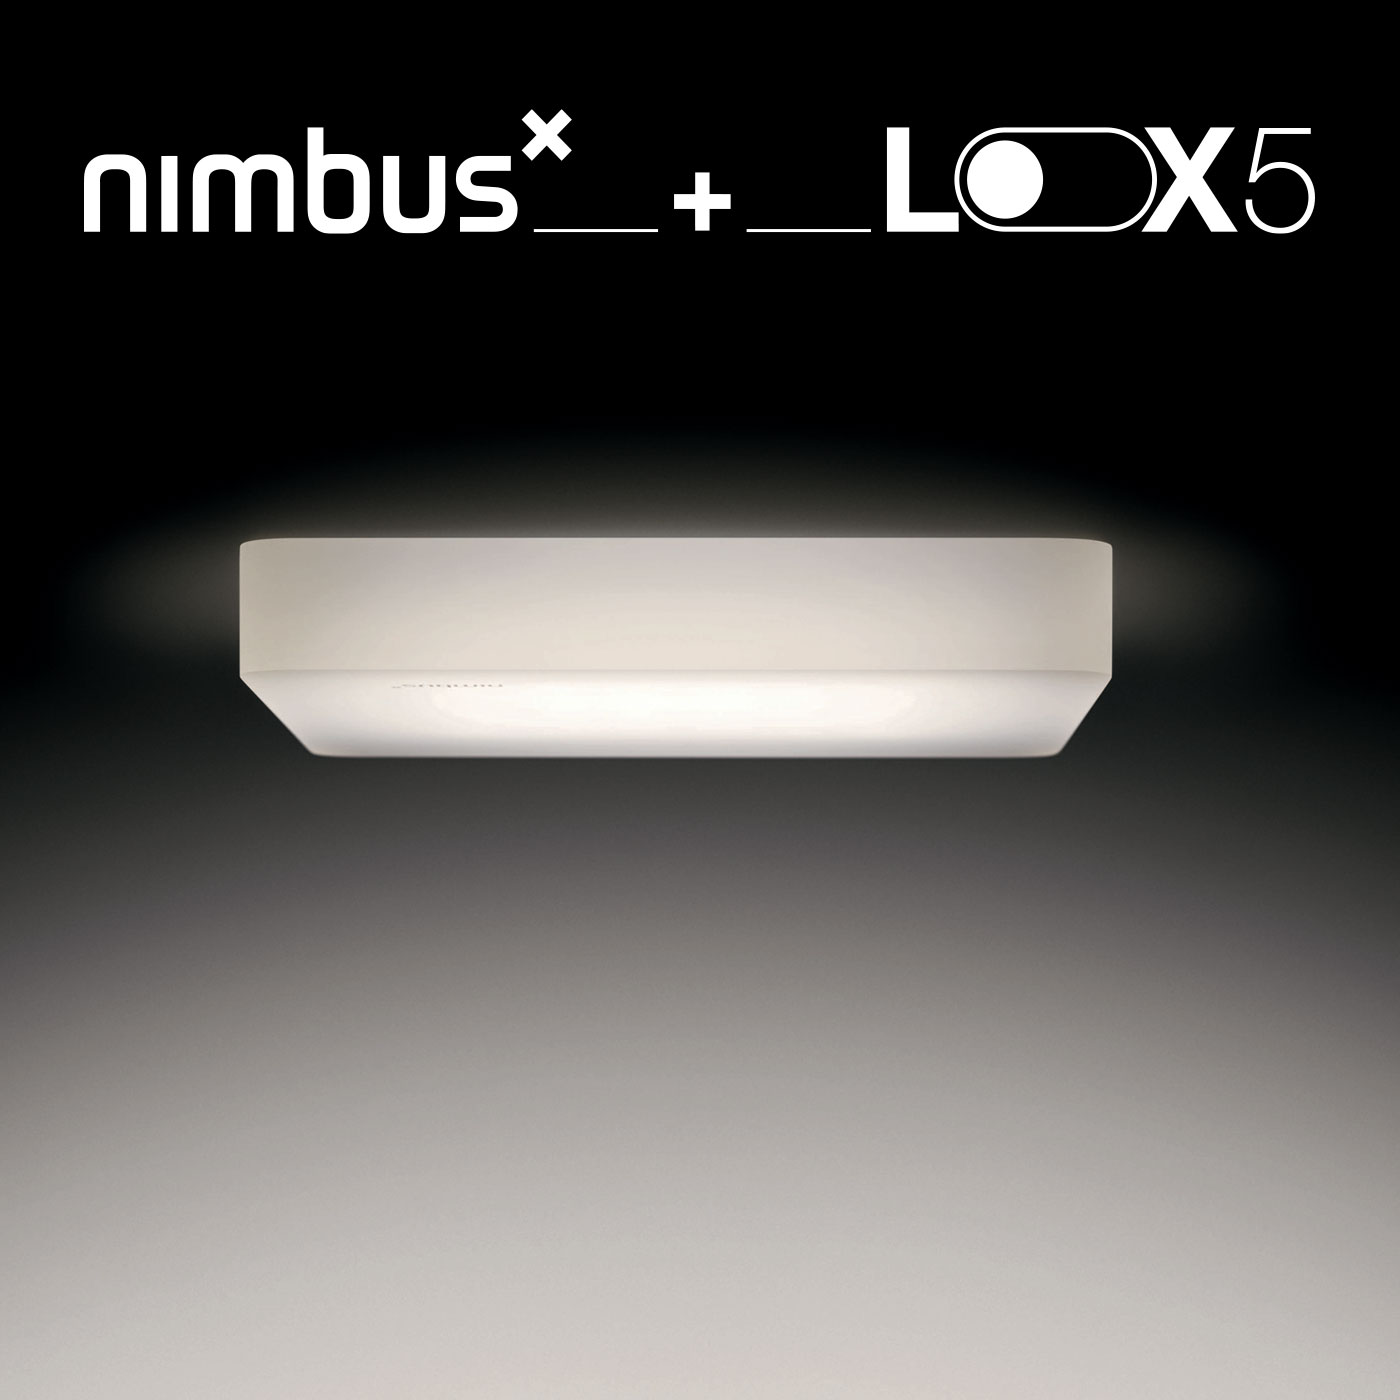 Nimbus + Loox 5 – Lampade e sistemi di isolamento acustico. Integra le lampade Nimbus al sistema Loox 5